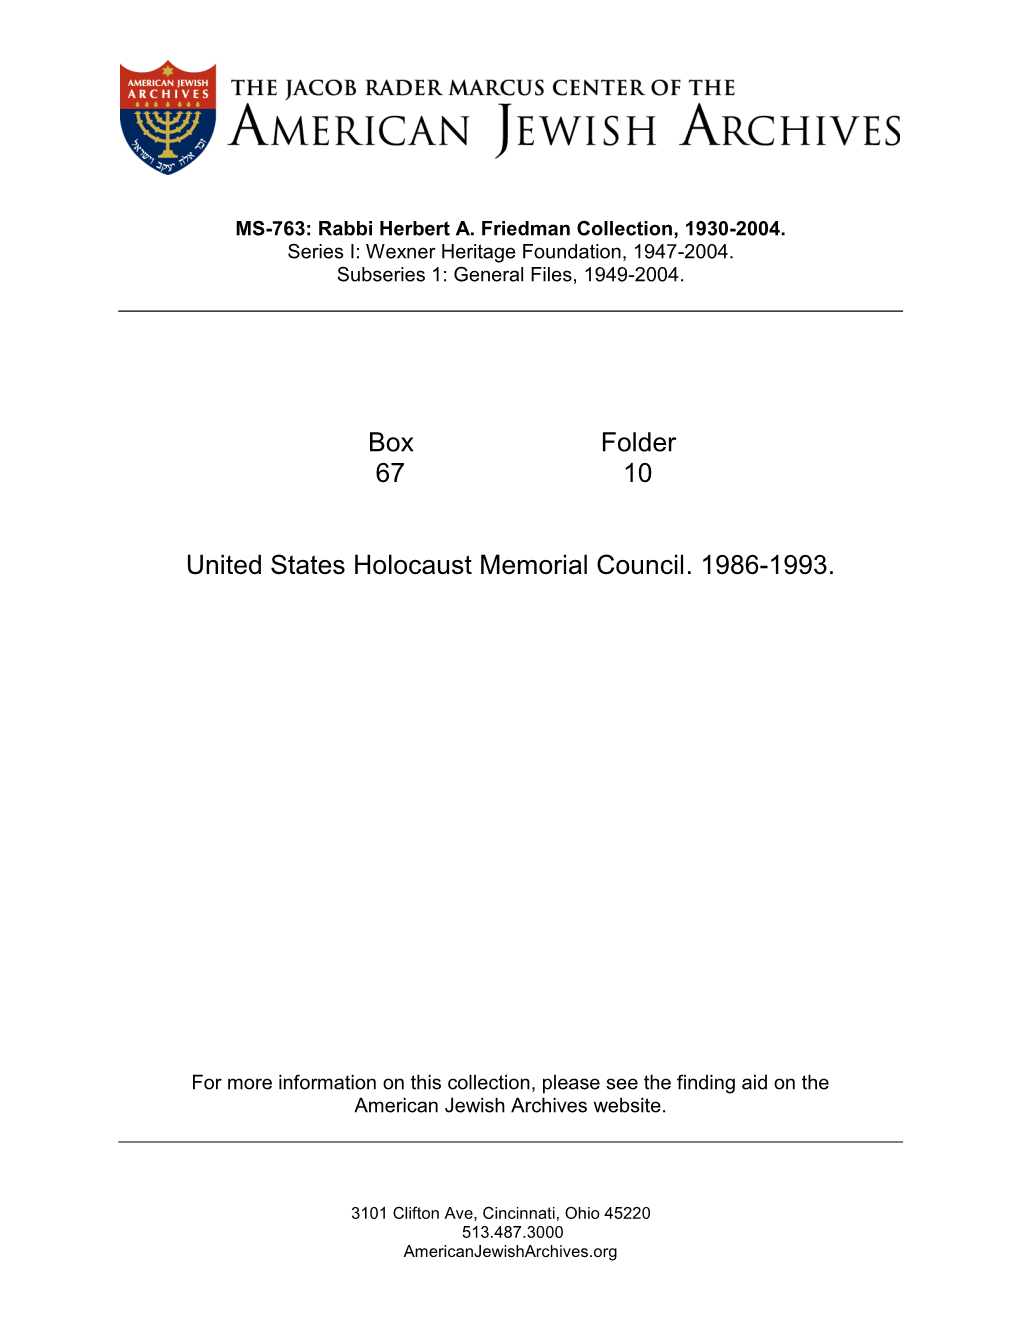 Box Folder 67 10 United States Holocaust Memorial Council. 1986